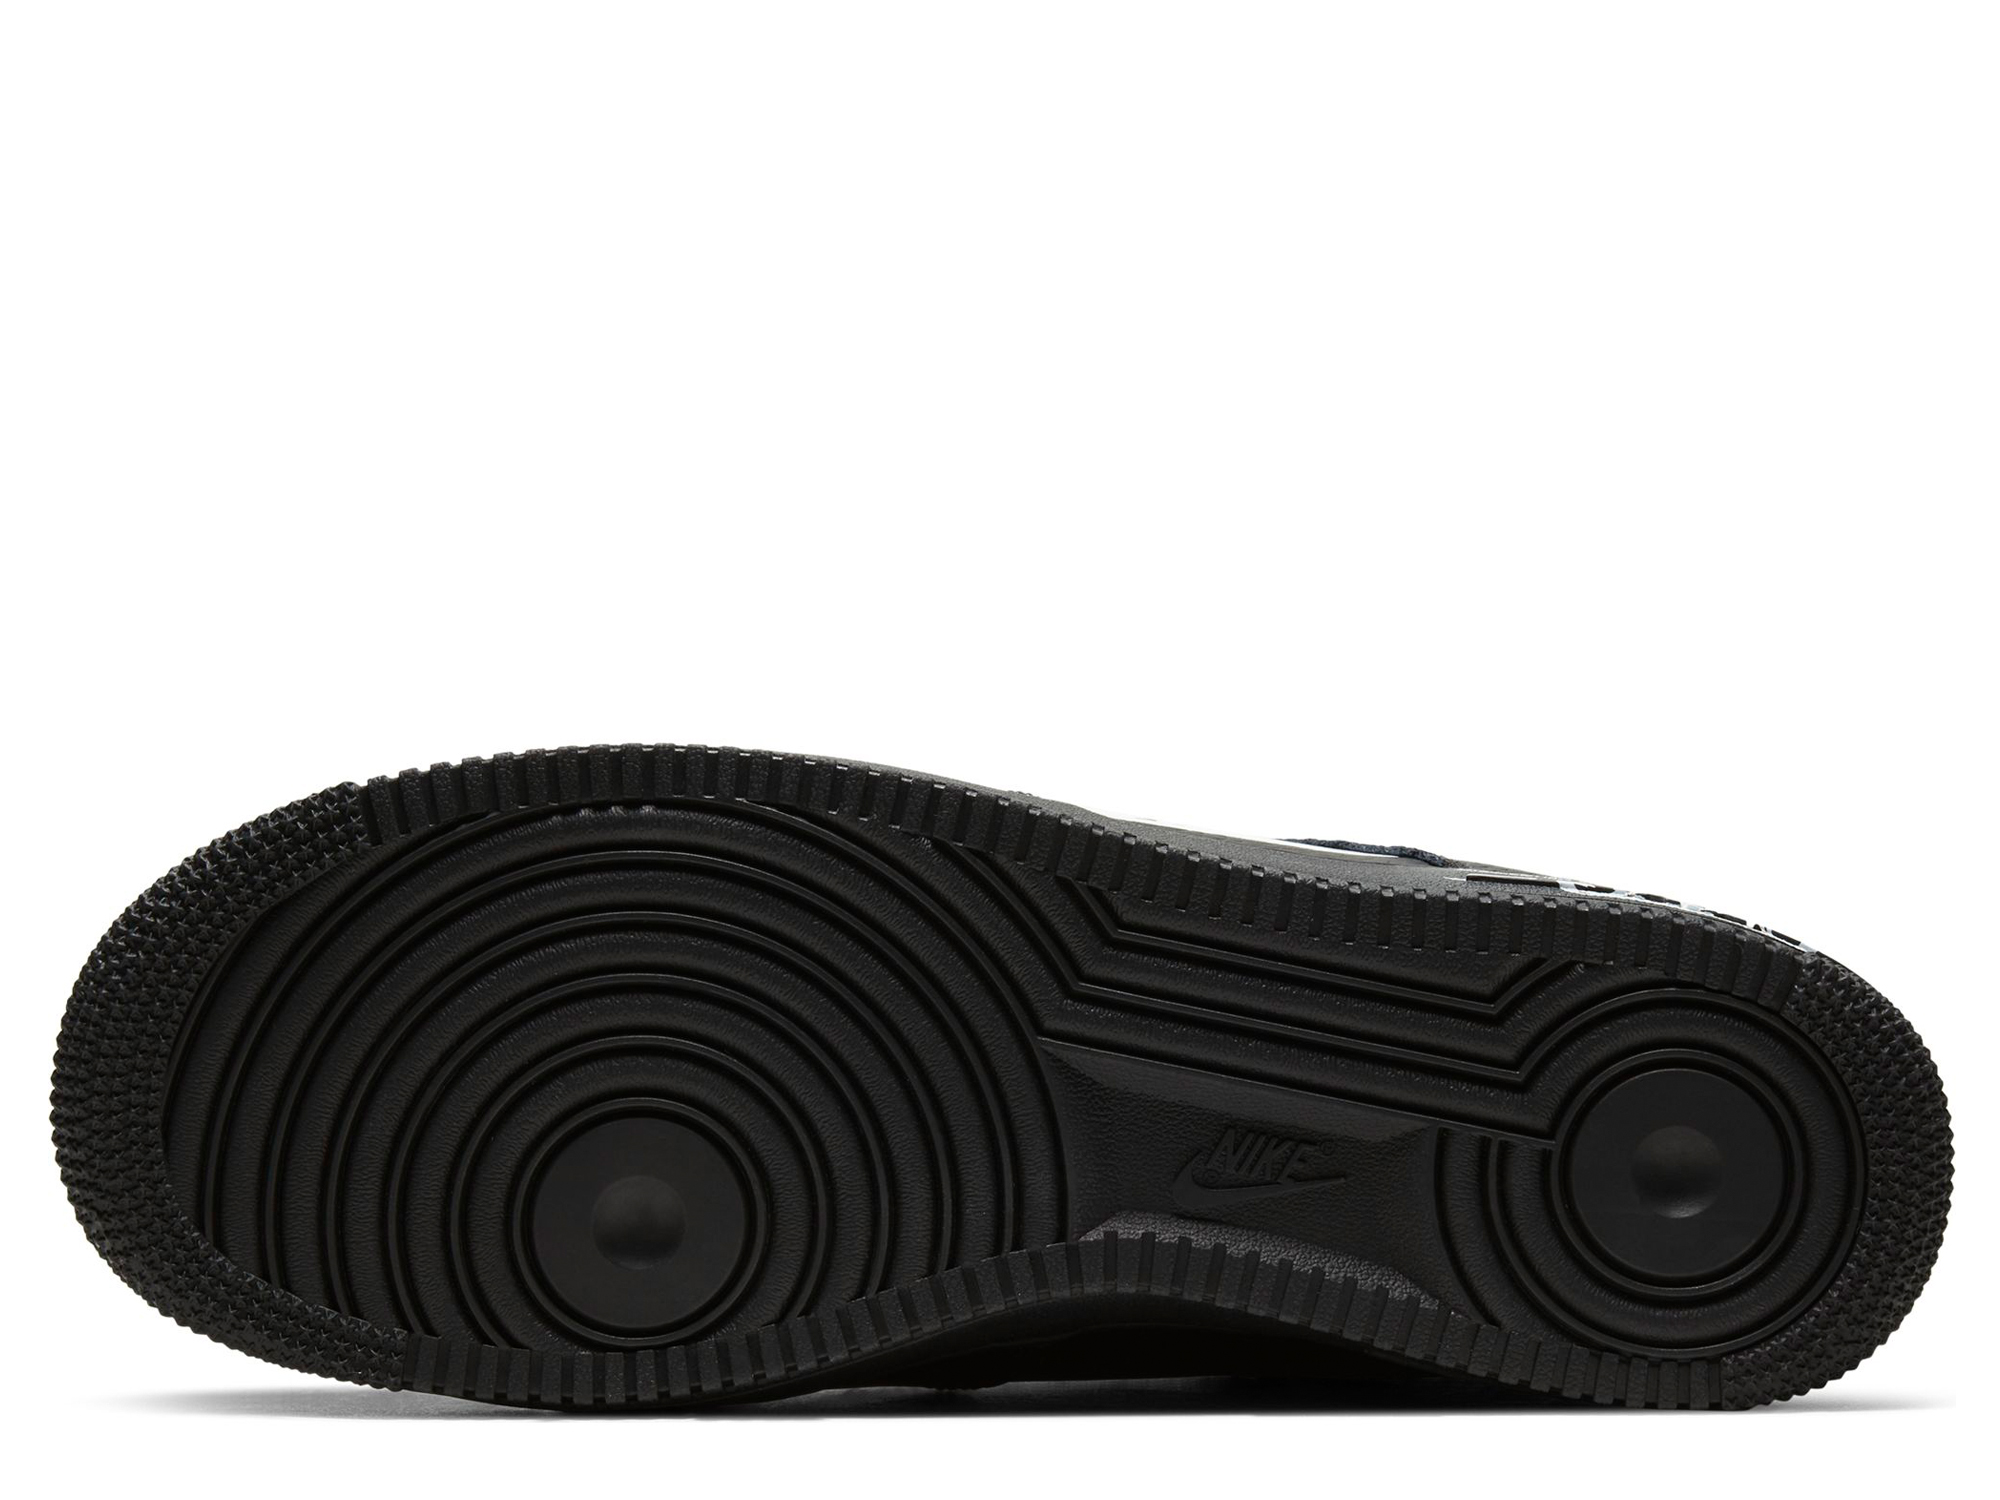 Nike Air Force 1 LV8 Utility Herren Sneaker